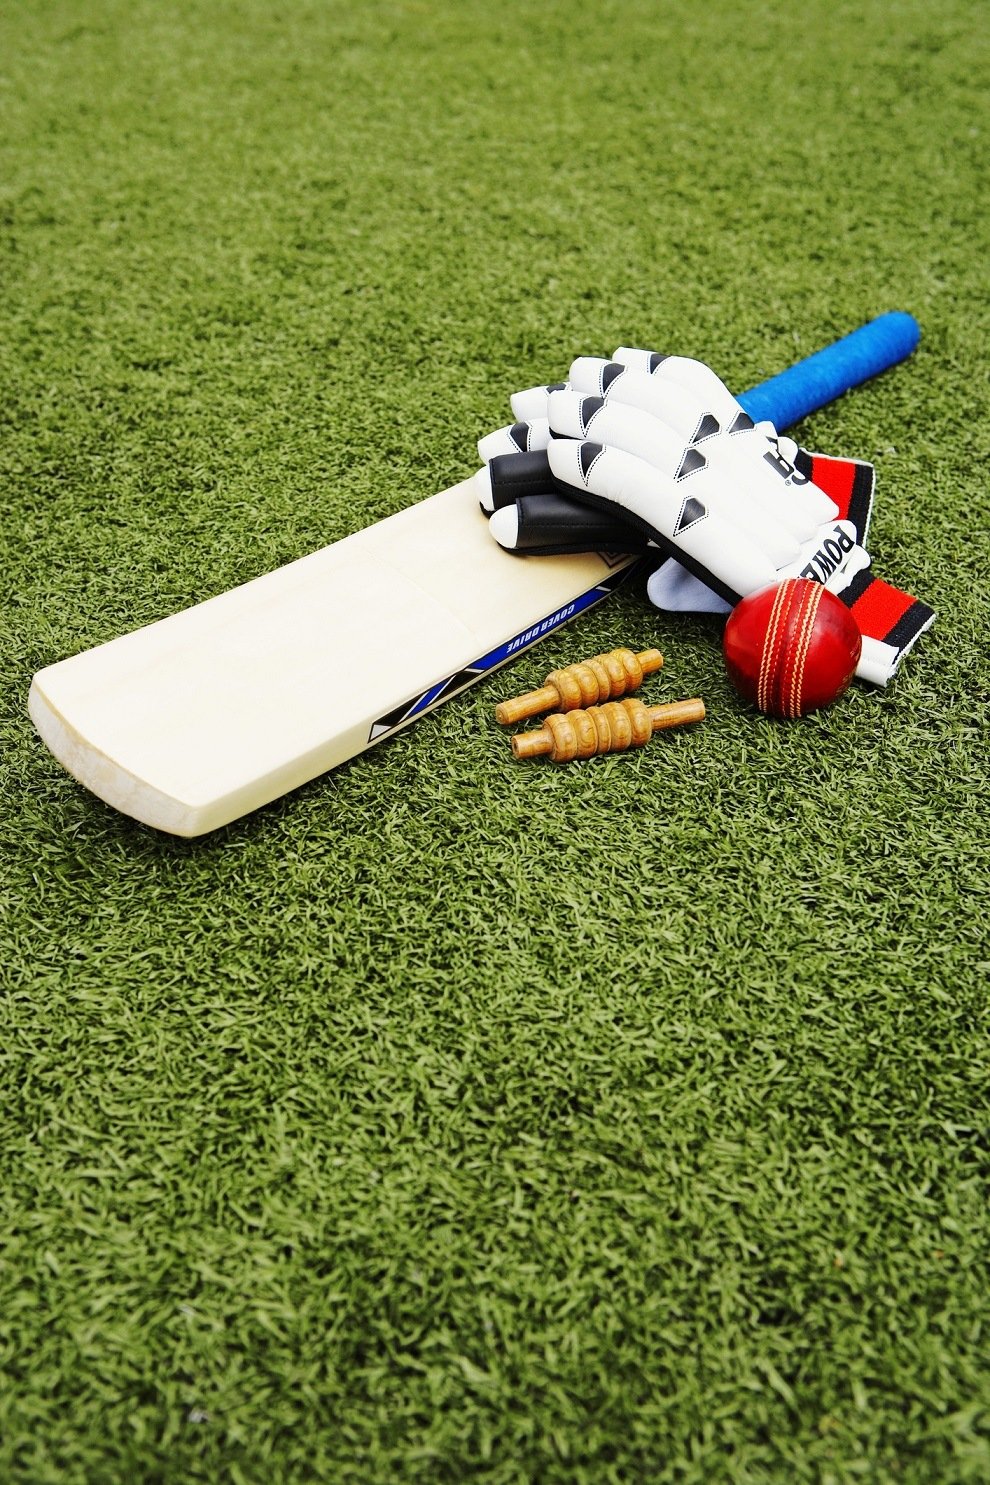 Cricket bat and gloves